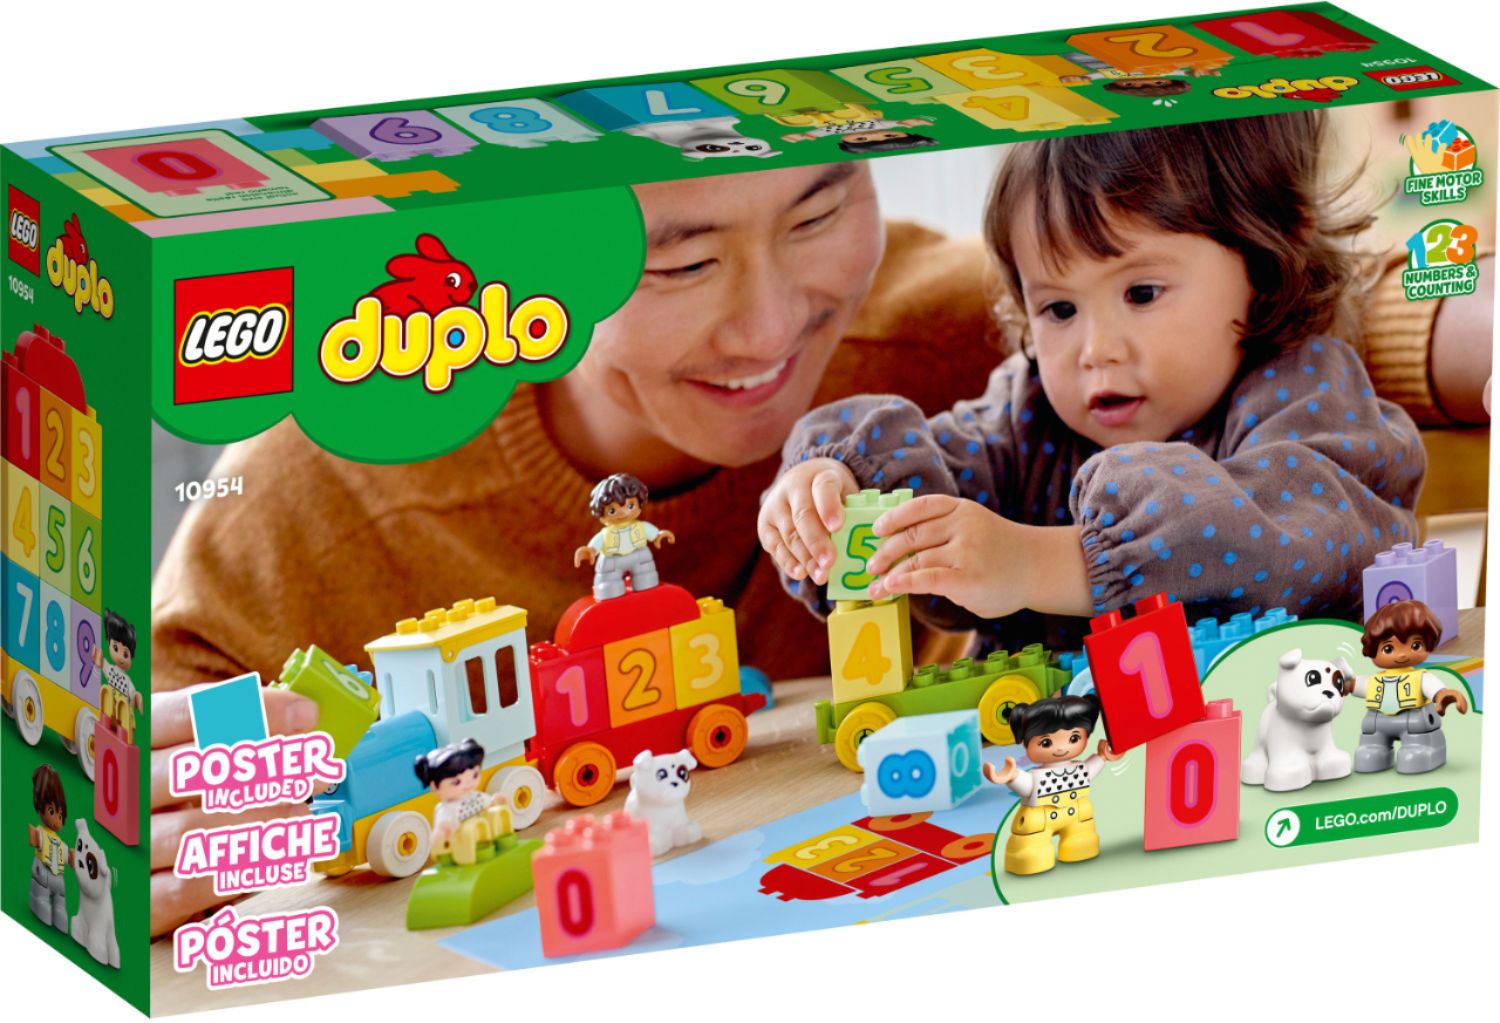 LEGO Family - Choo choo! 🚂 Do we have any DUPLO train enthusiasts